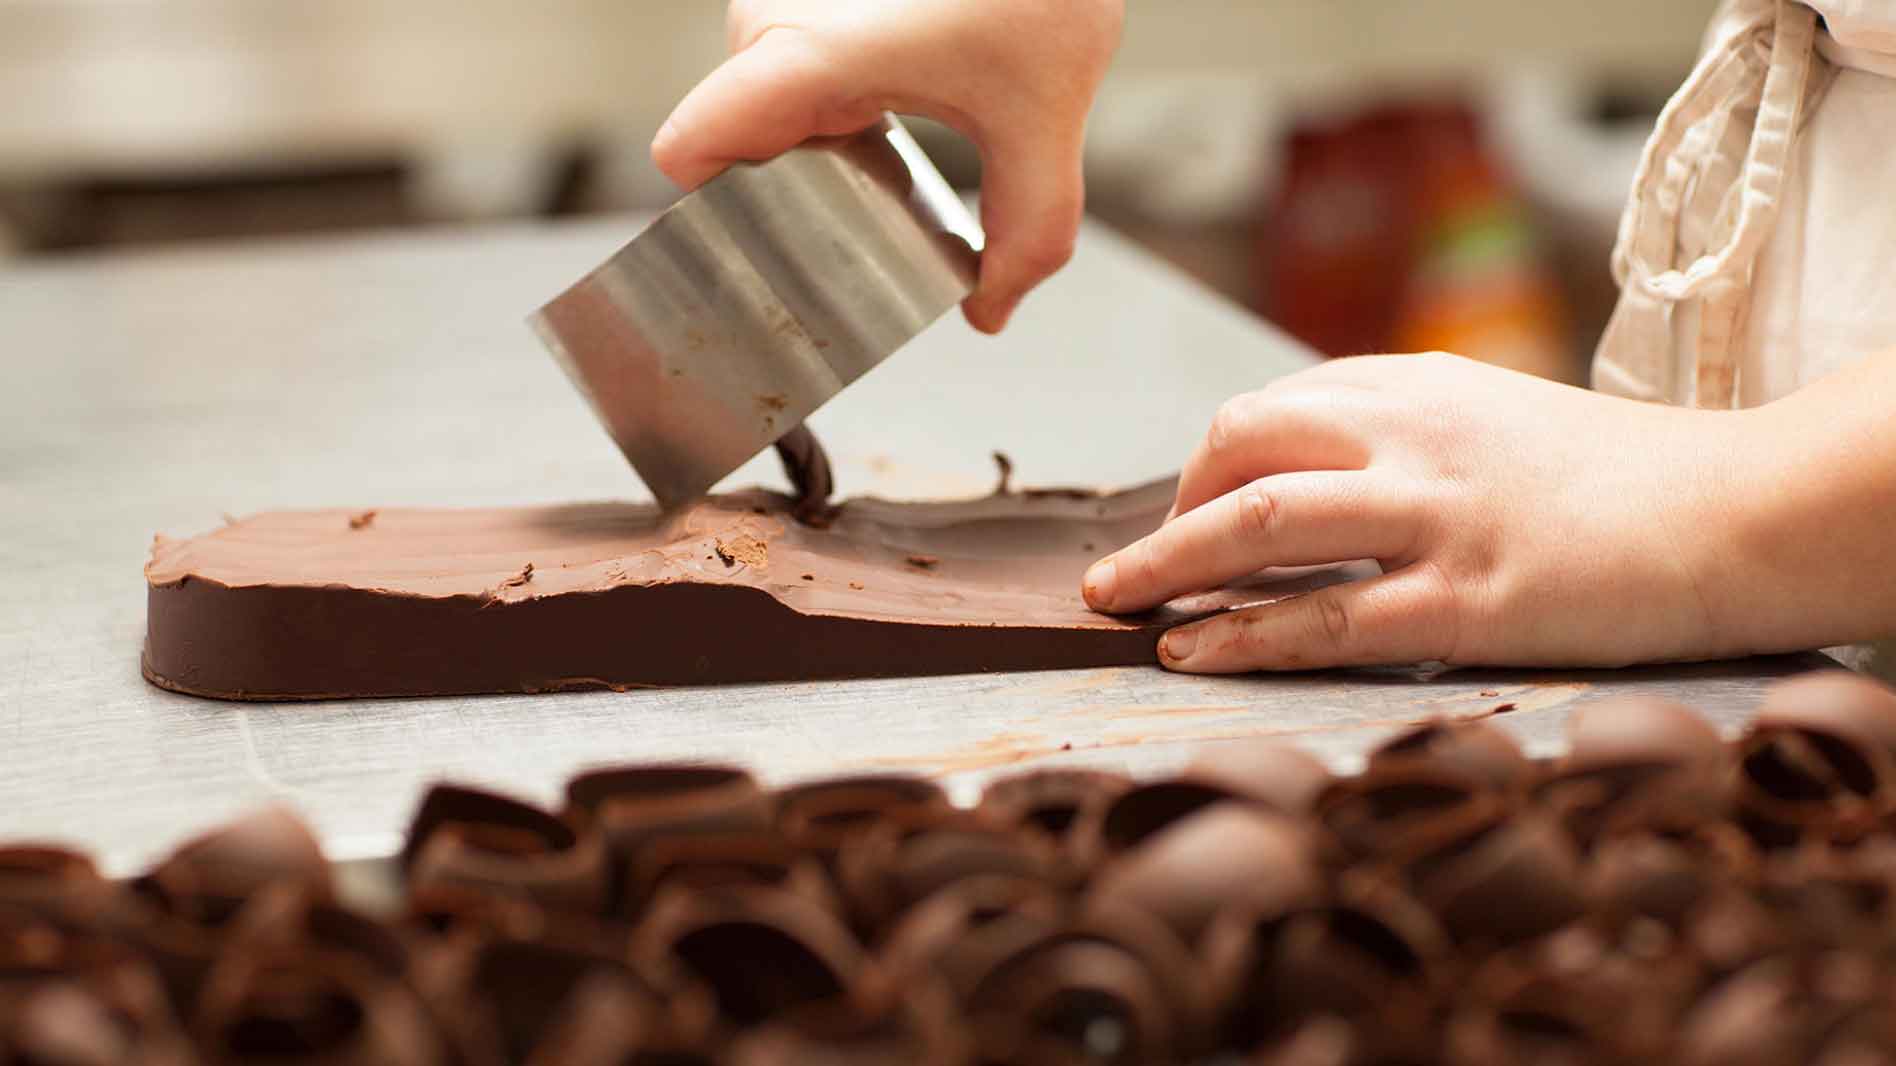 Chocolate 101: Know your chocolate basics!